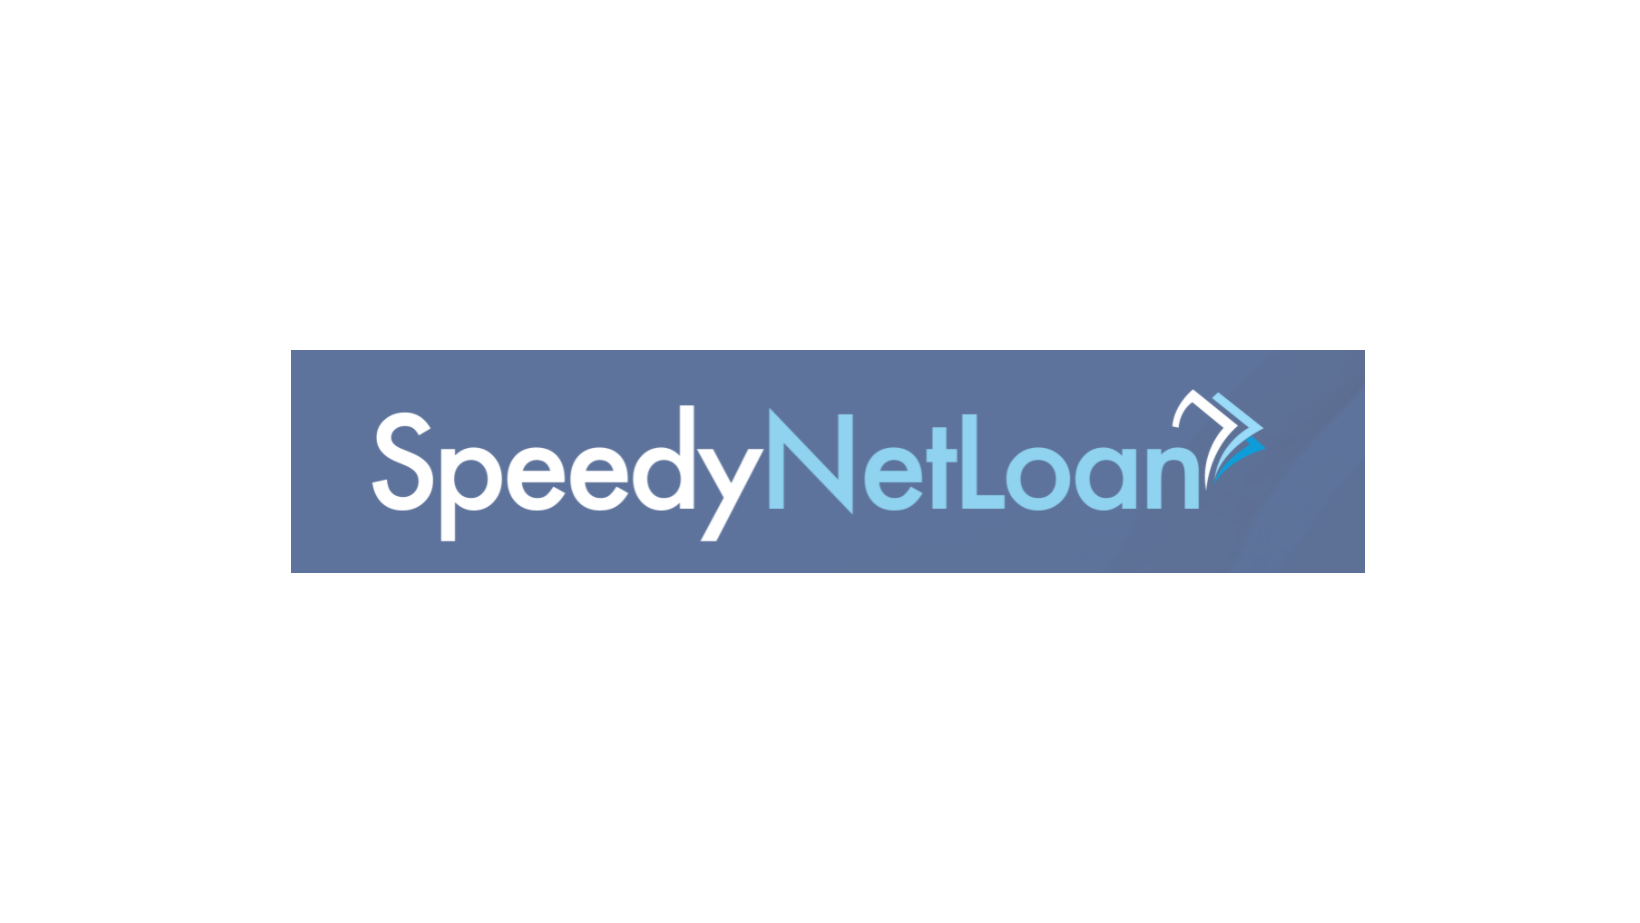 See what the benefits of the SpeedyNetLoan are. Source: SpeedyNetLoan.